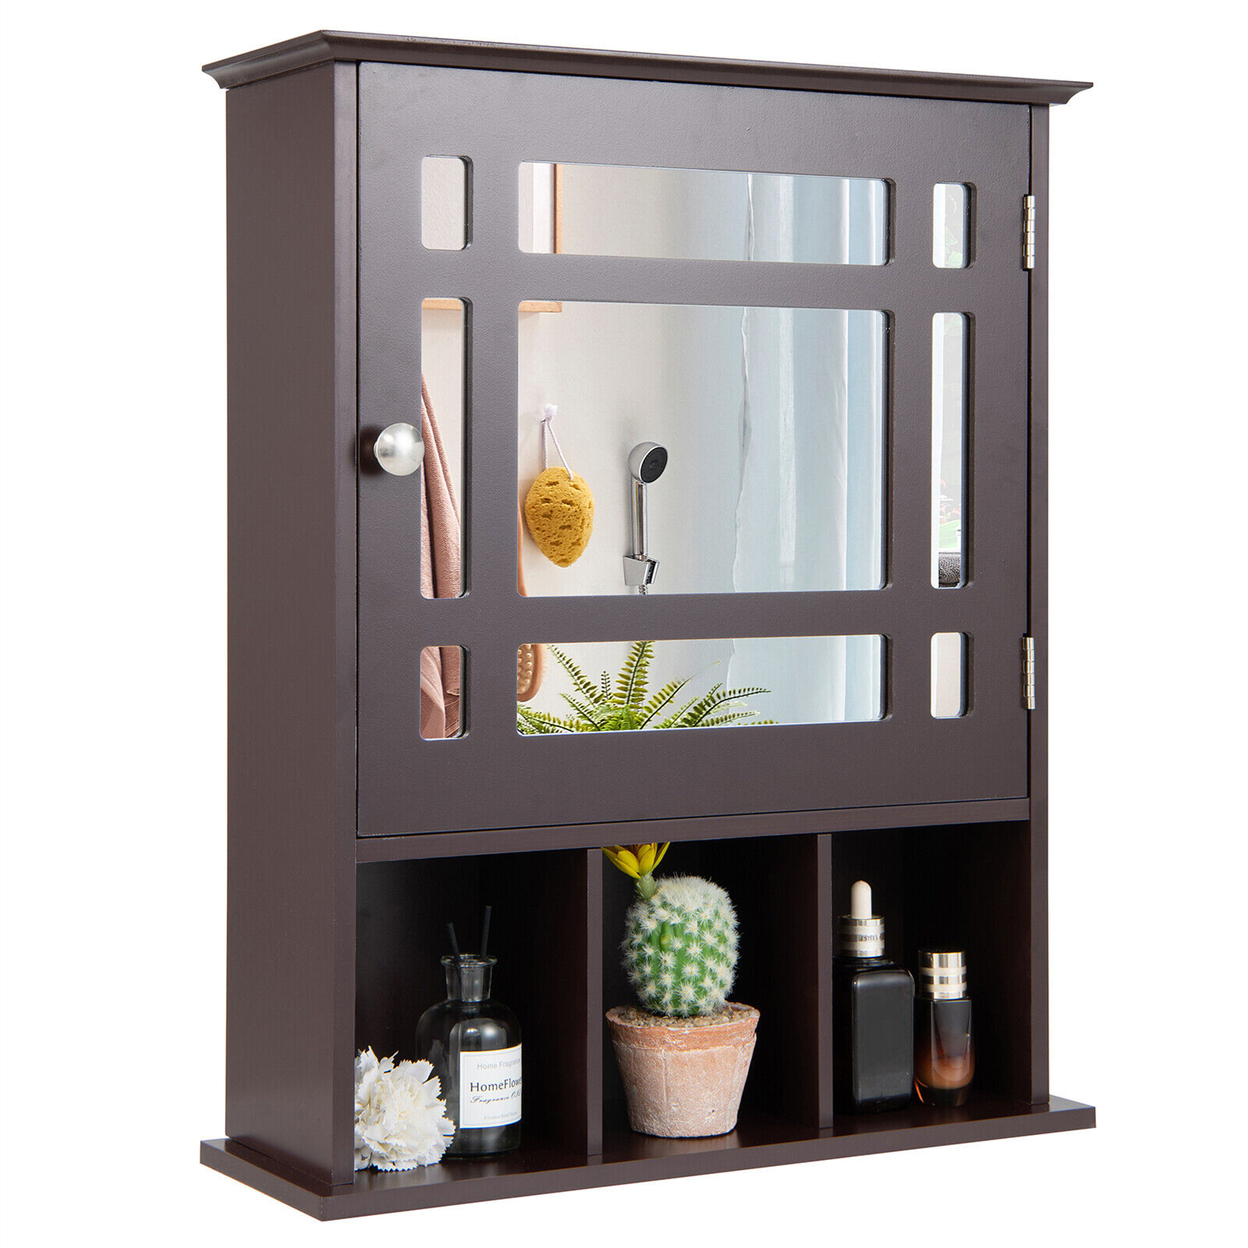 Mirrored Medicine Cabinet Bathroom Wall Mounted Storage W/Adjustable Shelf - Brown